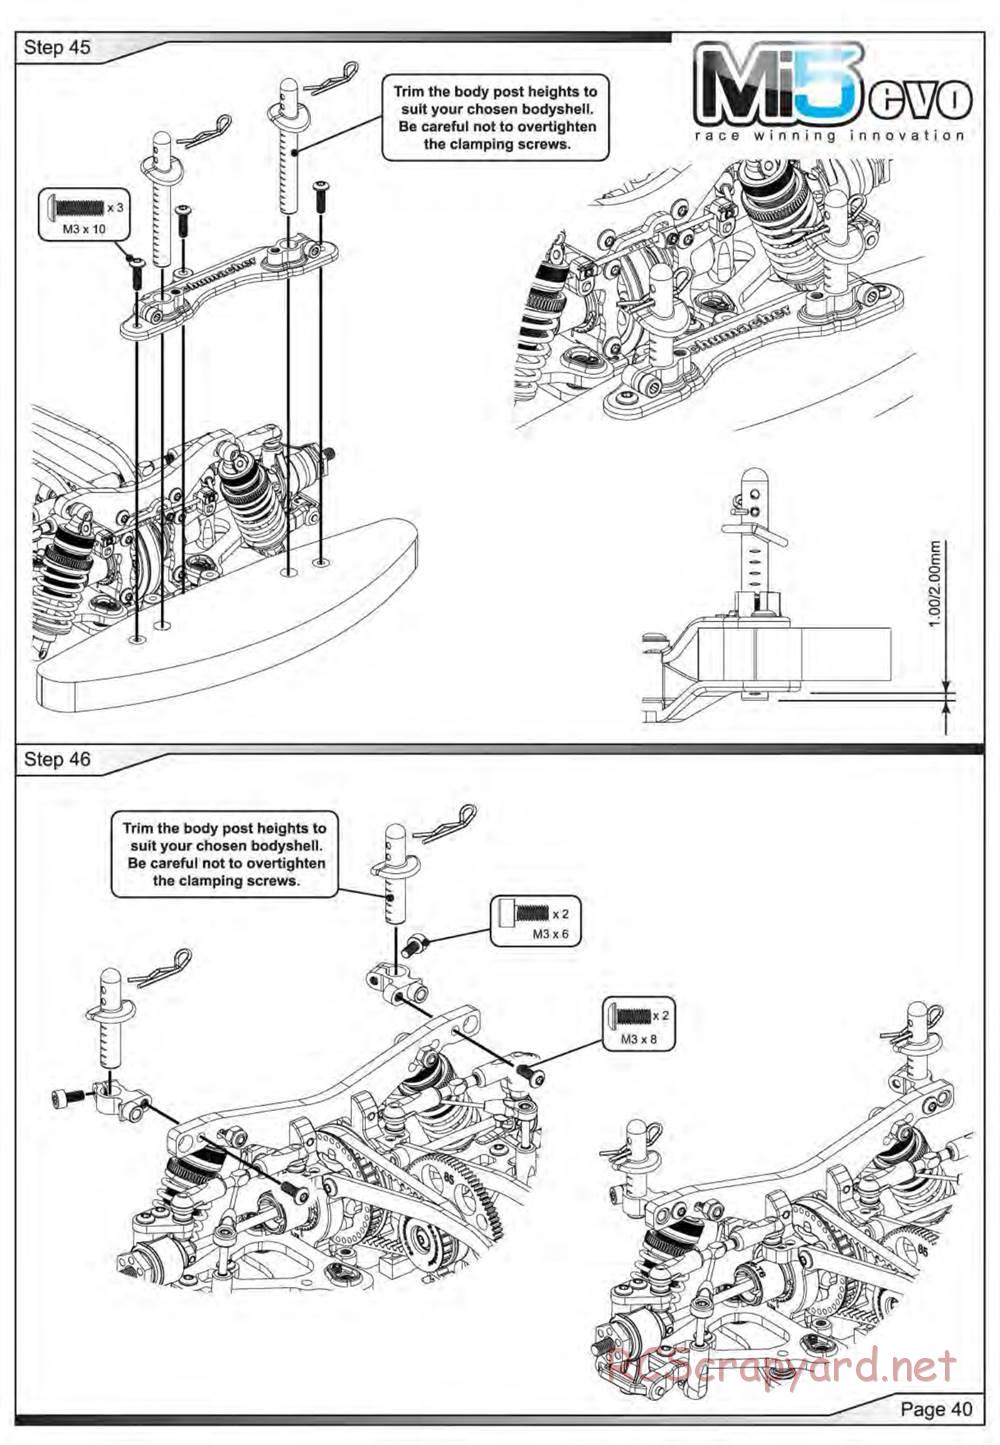 Schumacher - Mi5 Evo - Manual - Page 41